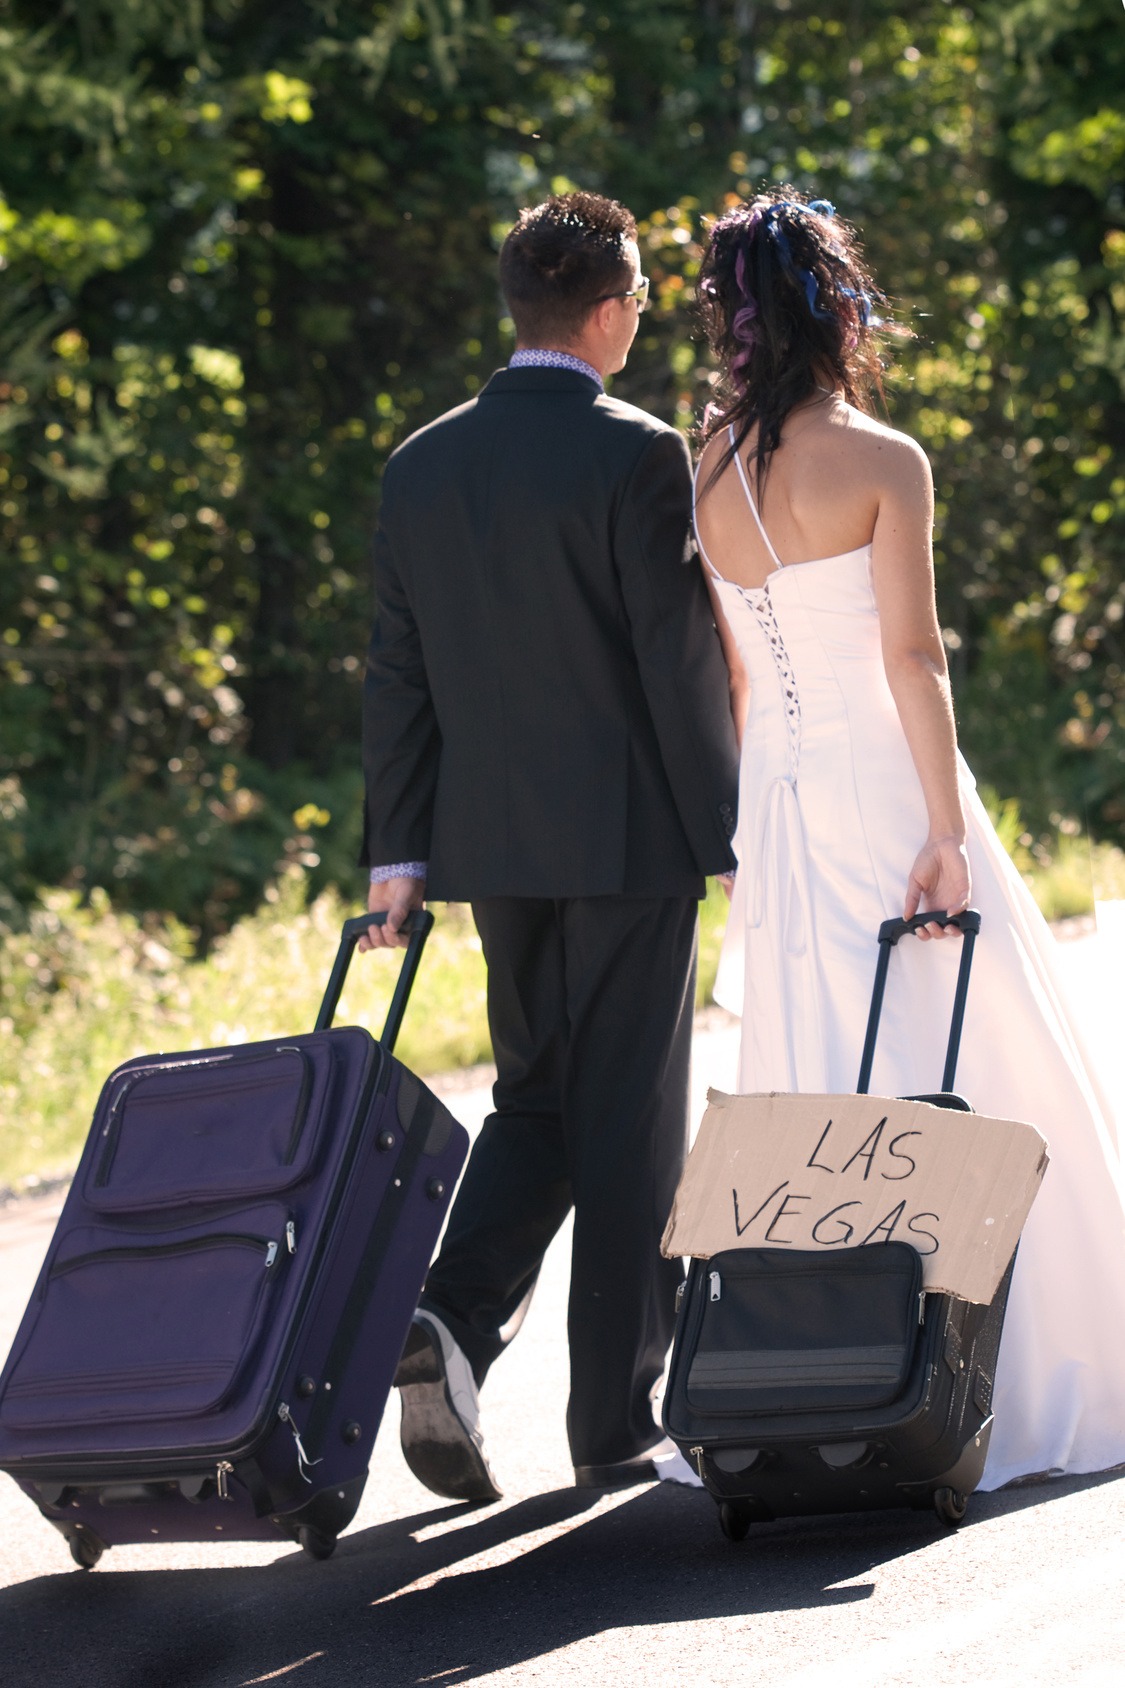 4 Online Promotion Tips for Las Vegas Wedding Venues